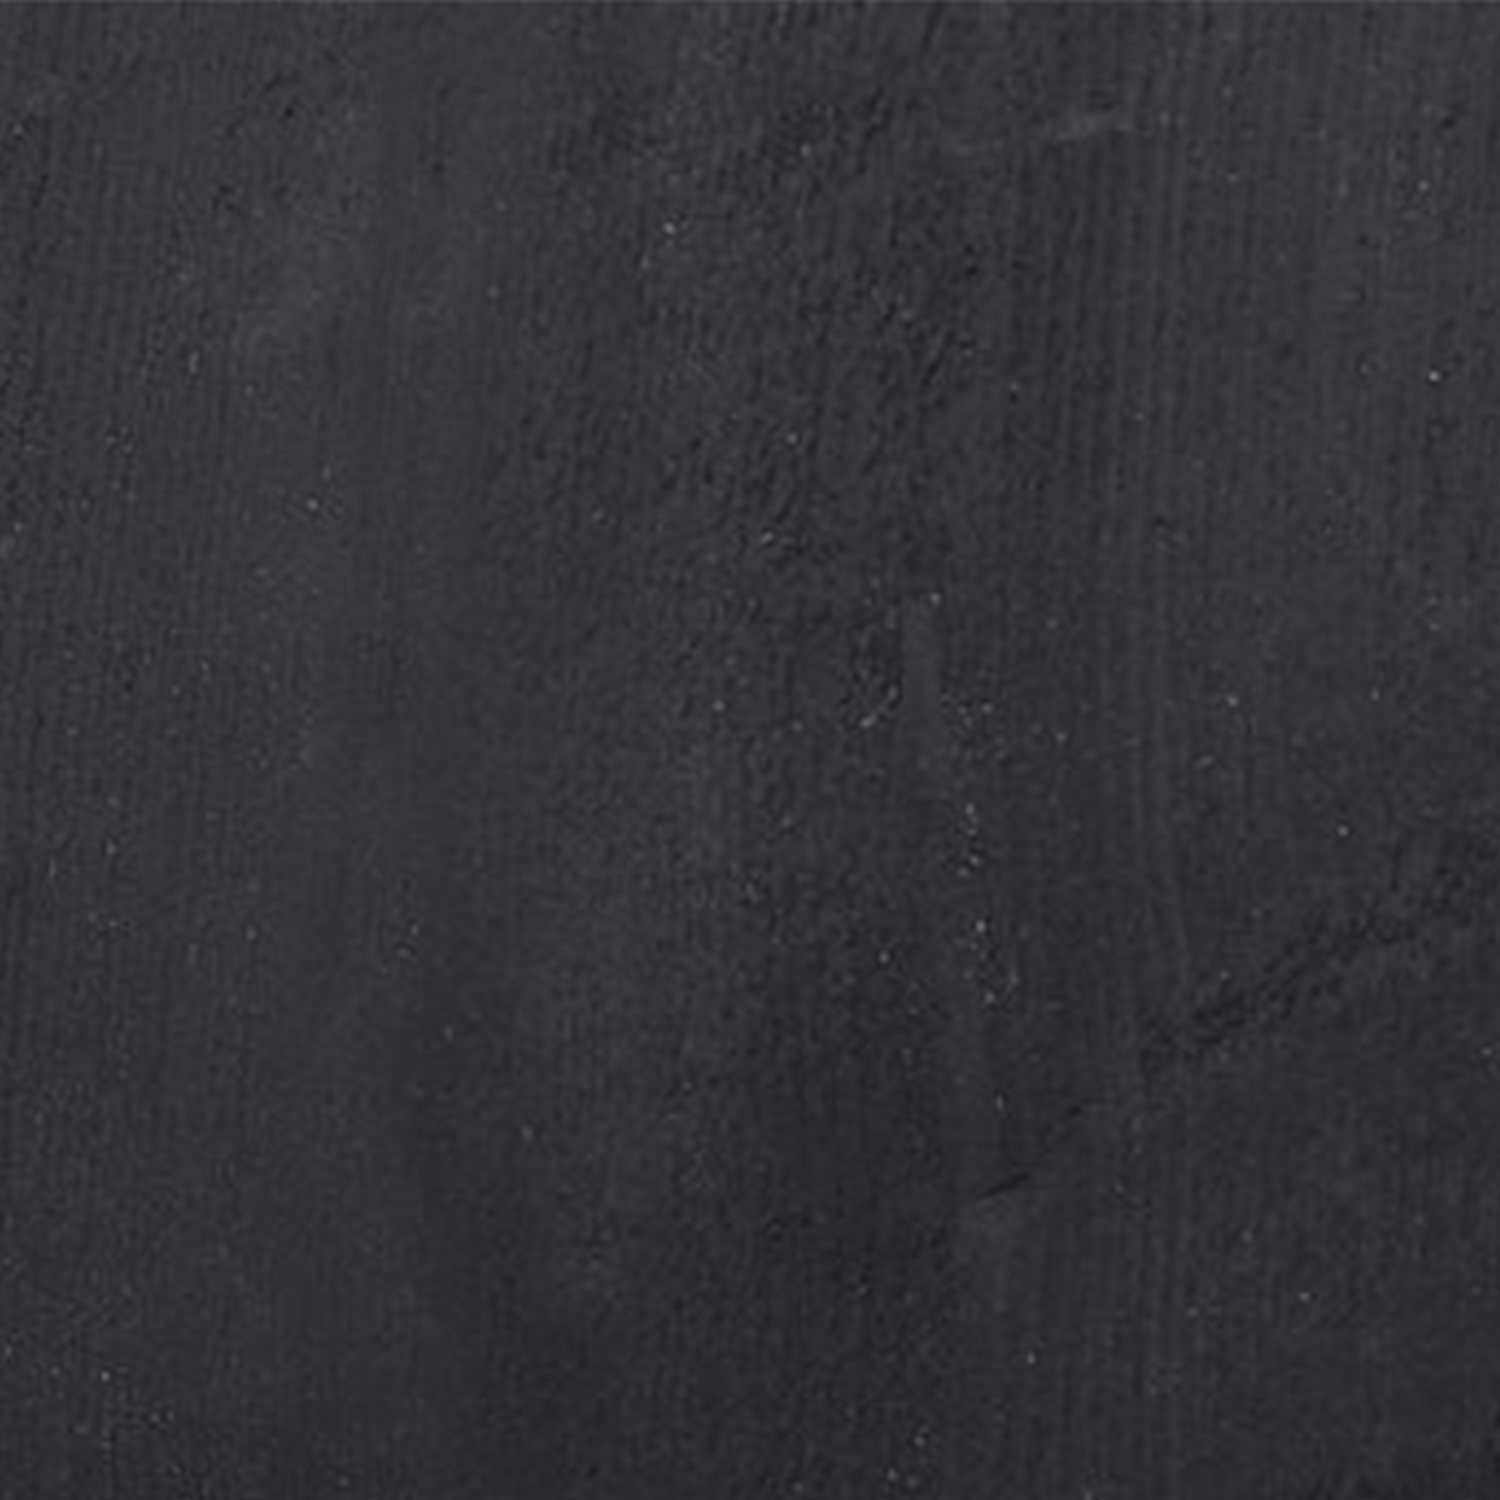  Douglas plank 16x140 mm - ZWART - ruw douglas hout - aangedroogd (ad) 20 - 25%